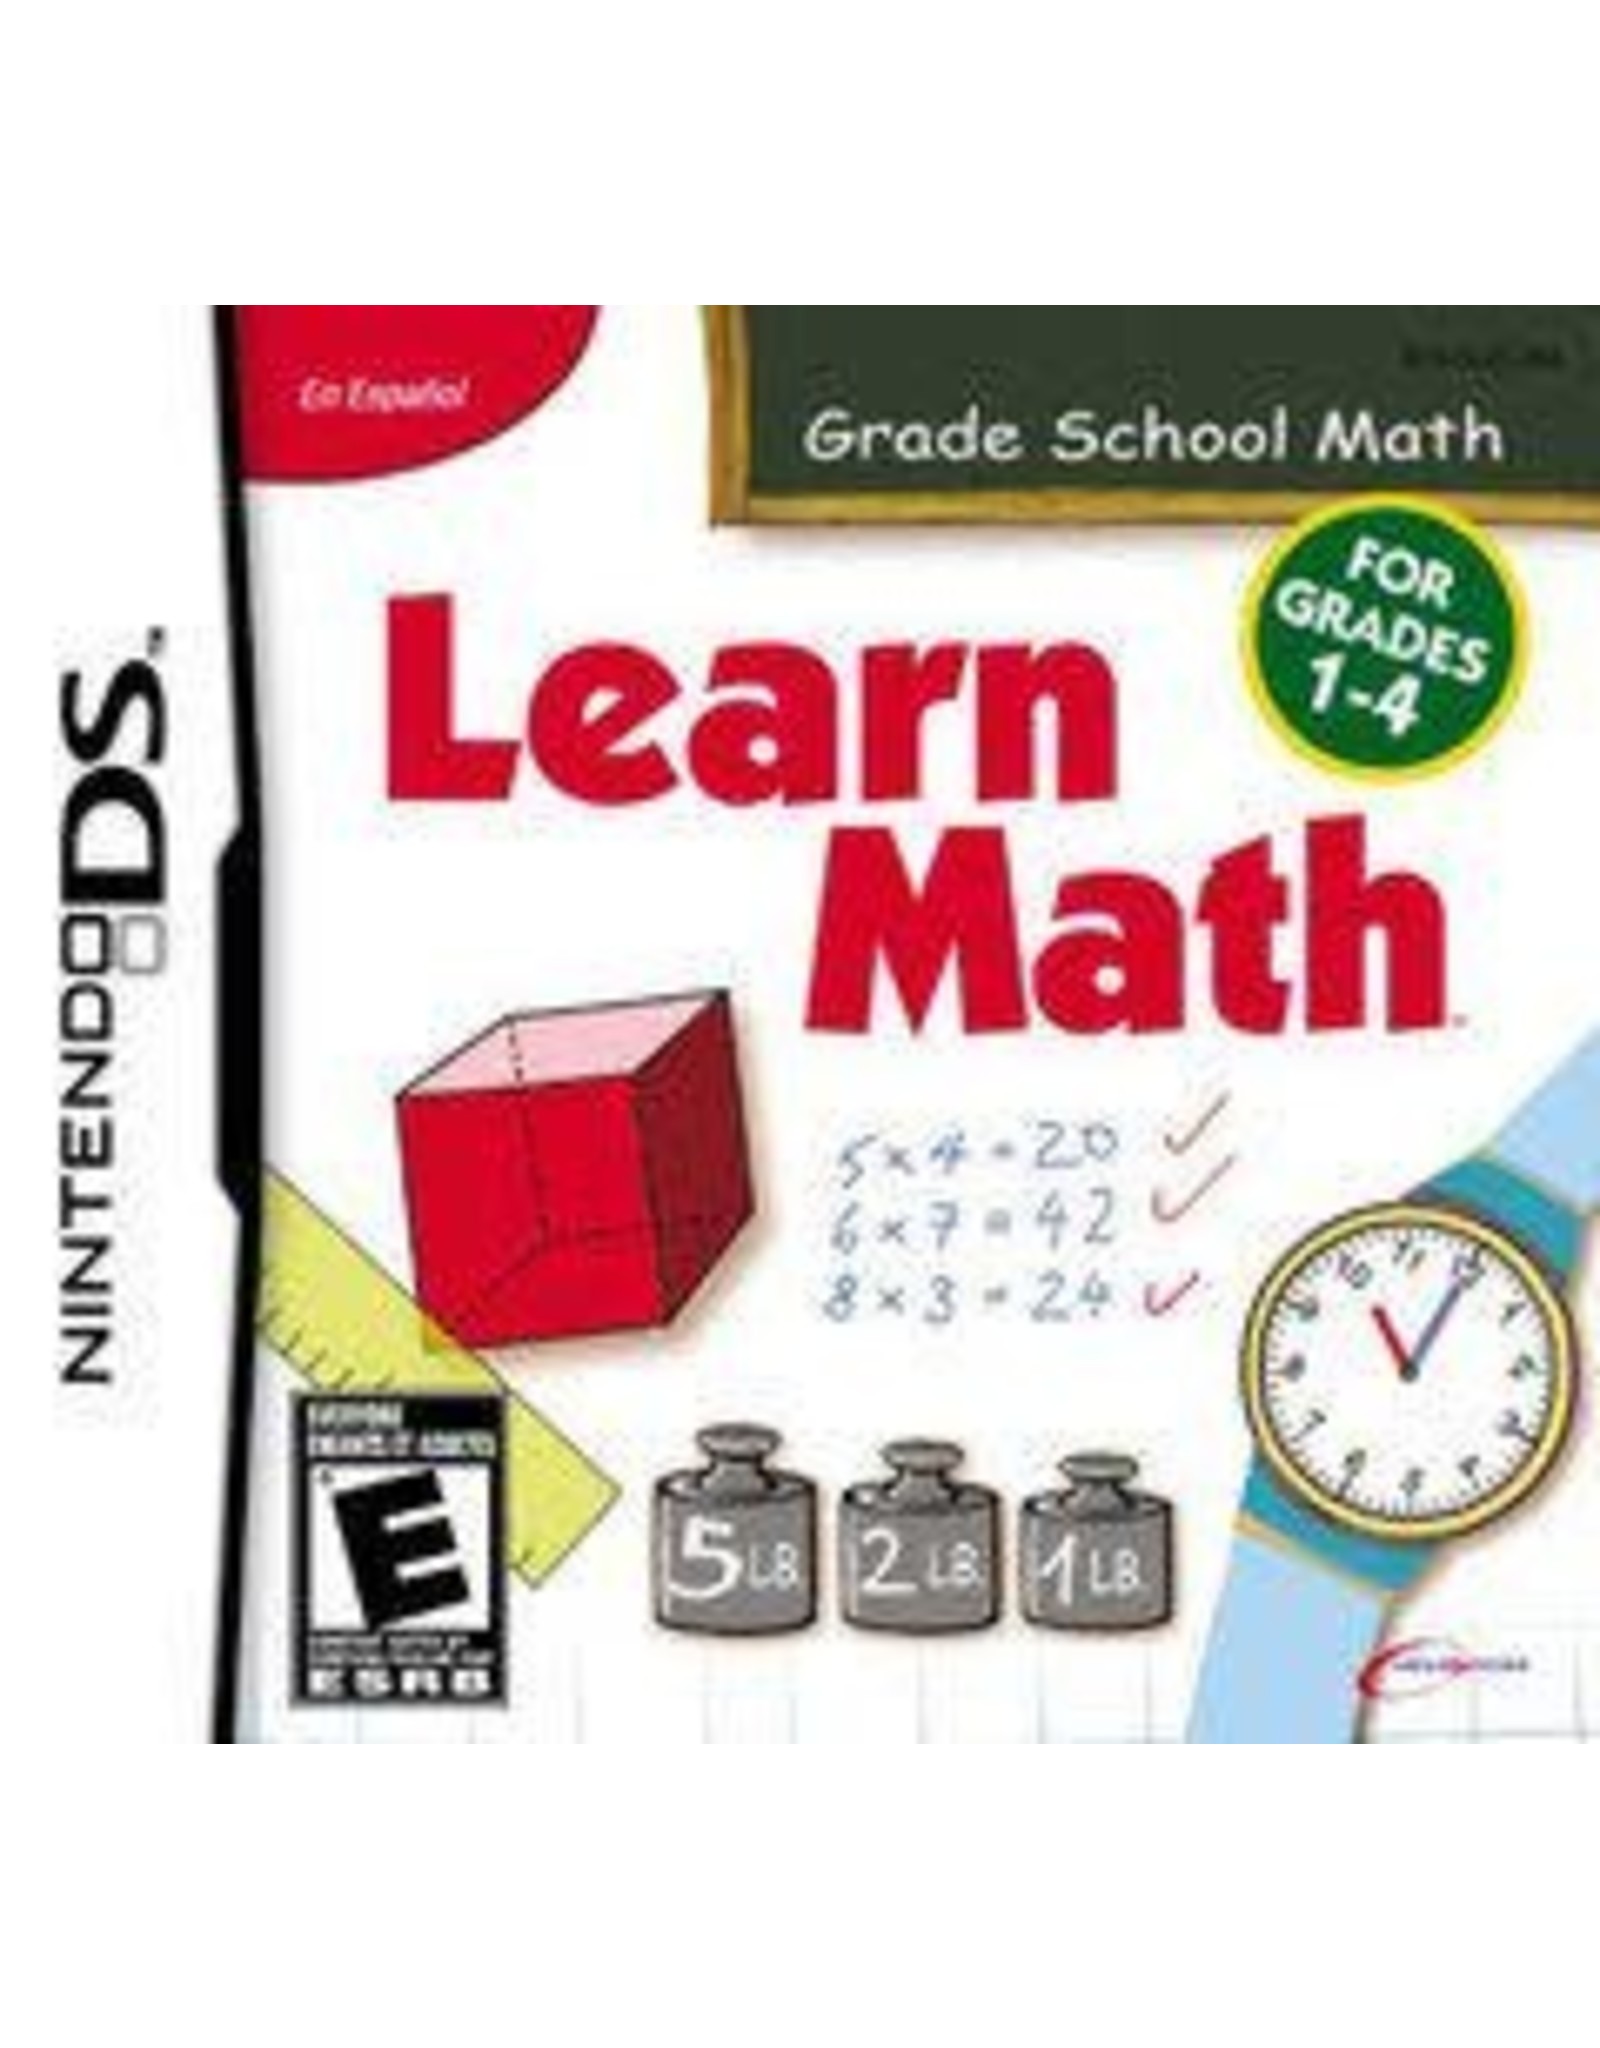 Nintendo DS Learn Math for Grades 1-4 (CiB)